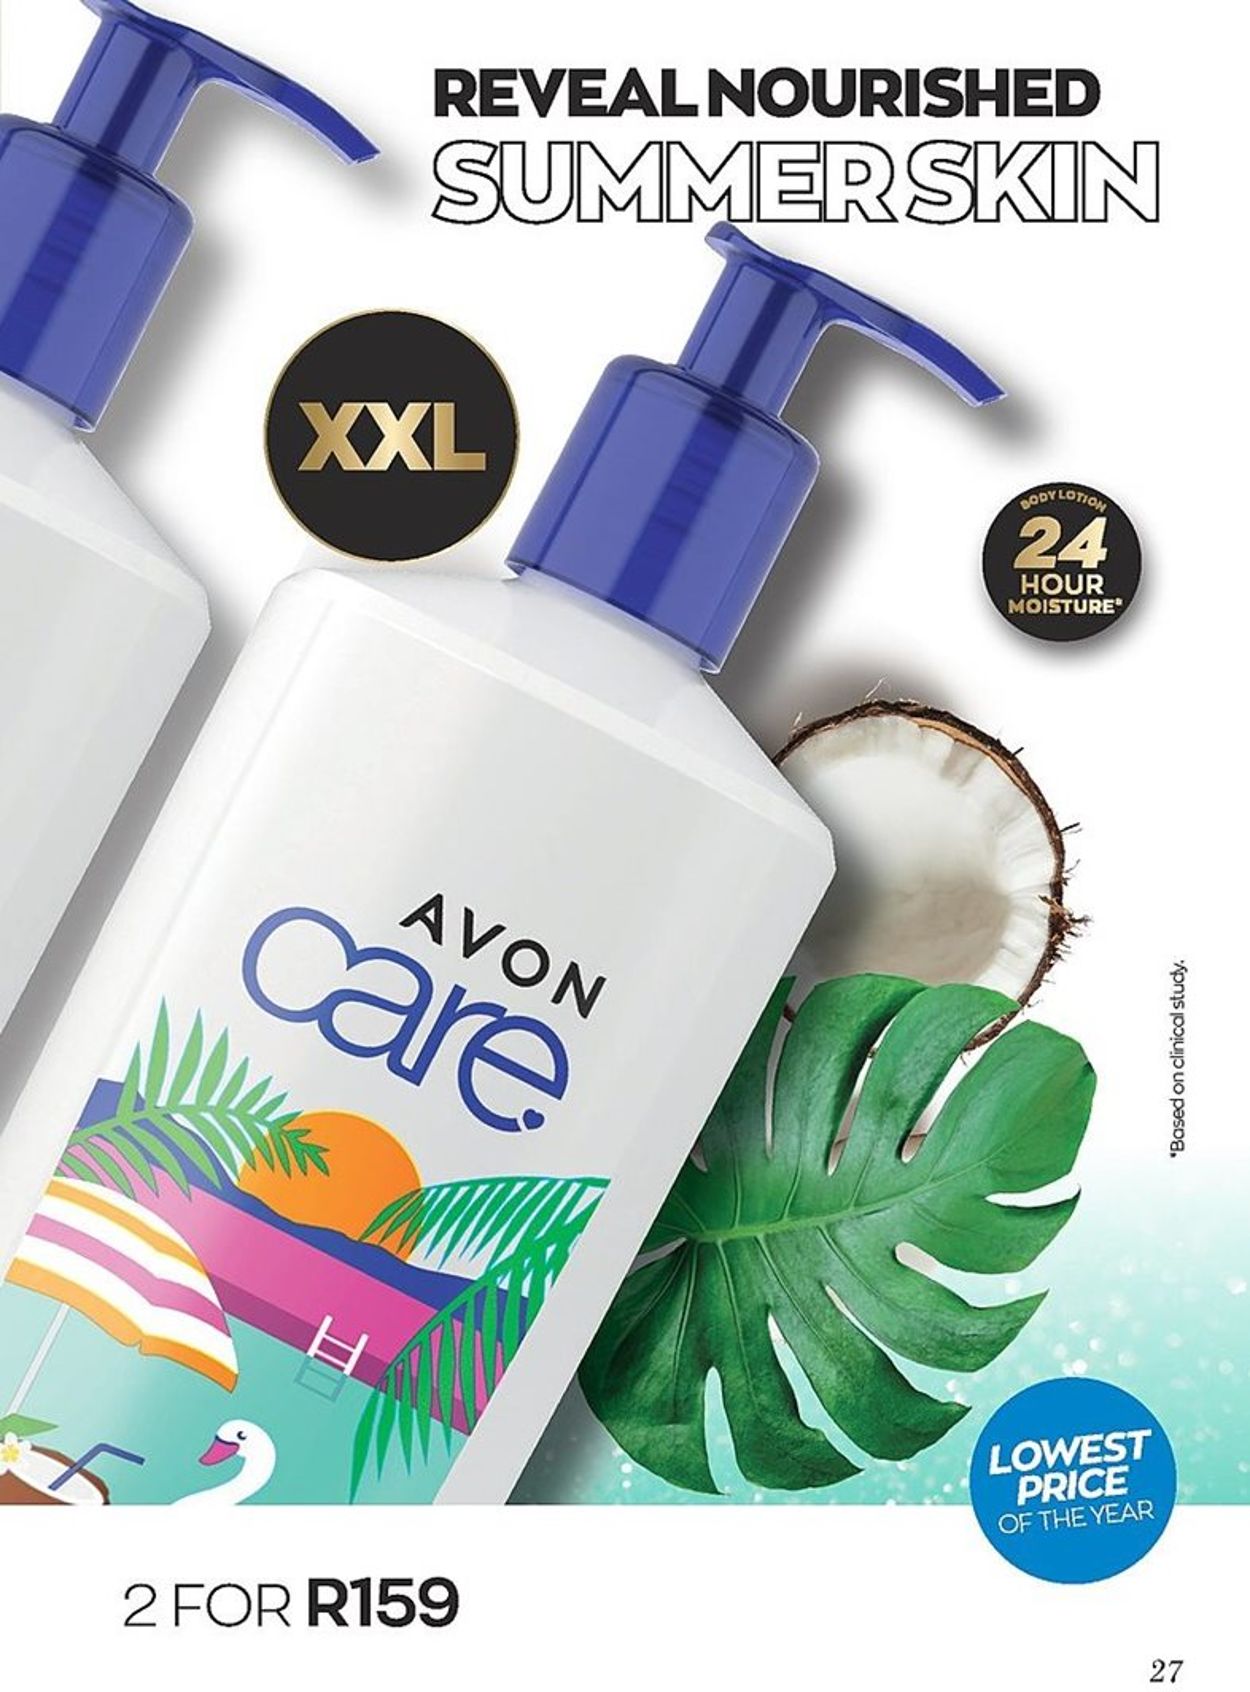 Avon Catalogue from 2022/01/03